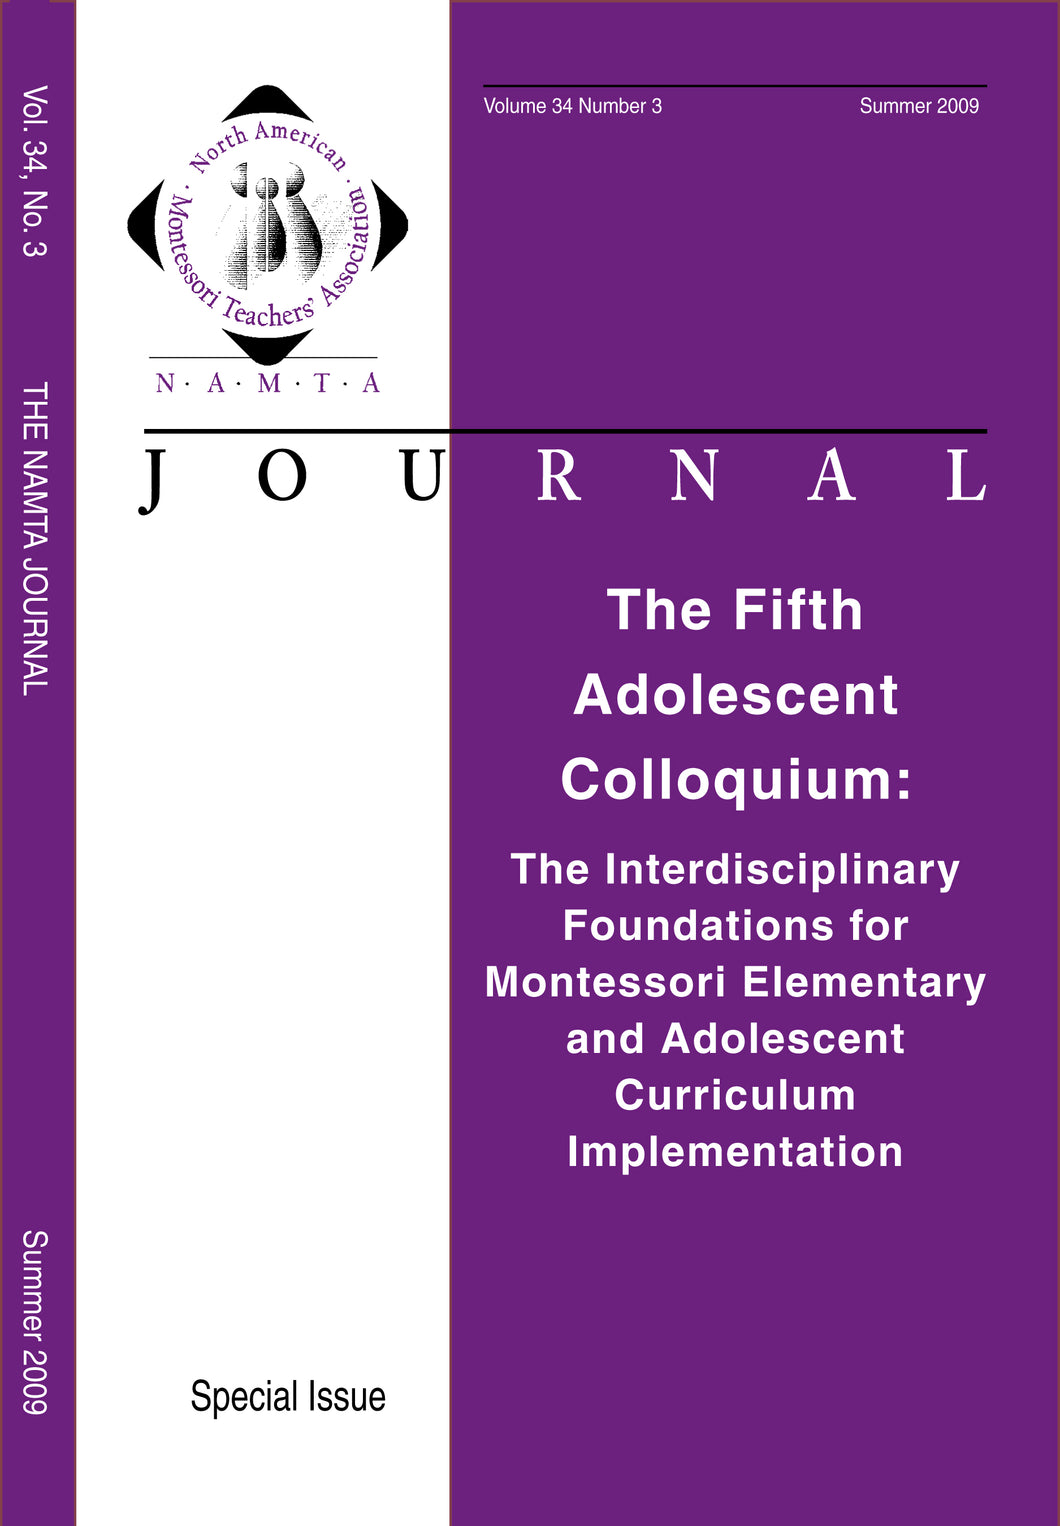 Vol 34, No 3: The Fifth Adolescent Colloquium:The Interdisciplinary Foundations for Montessori Elementary and Adolescent Curriculum Implementation